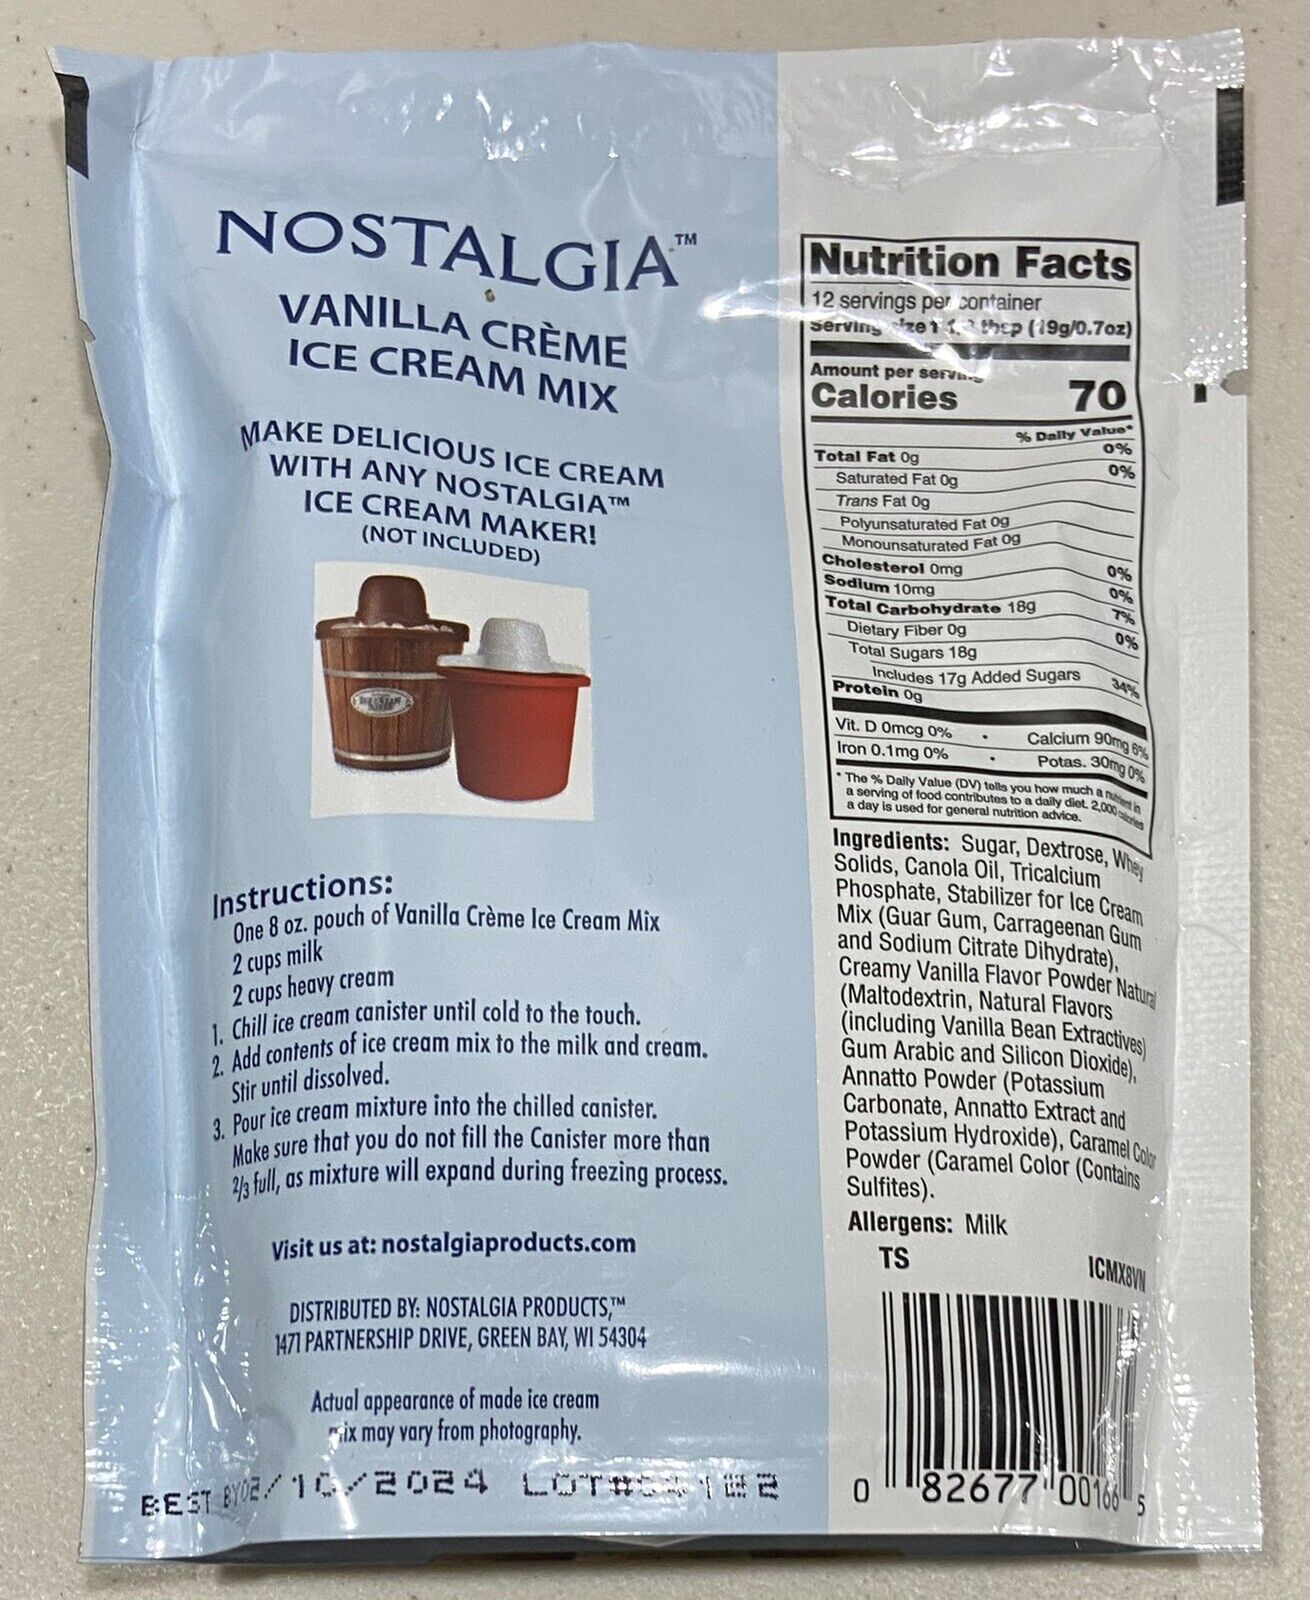 6-Pack Nostalgic Vanilla Creme Ice Cream Mix